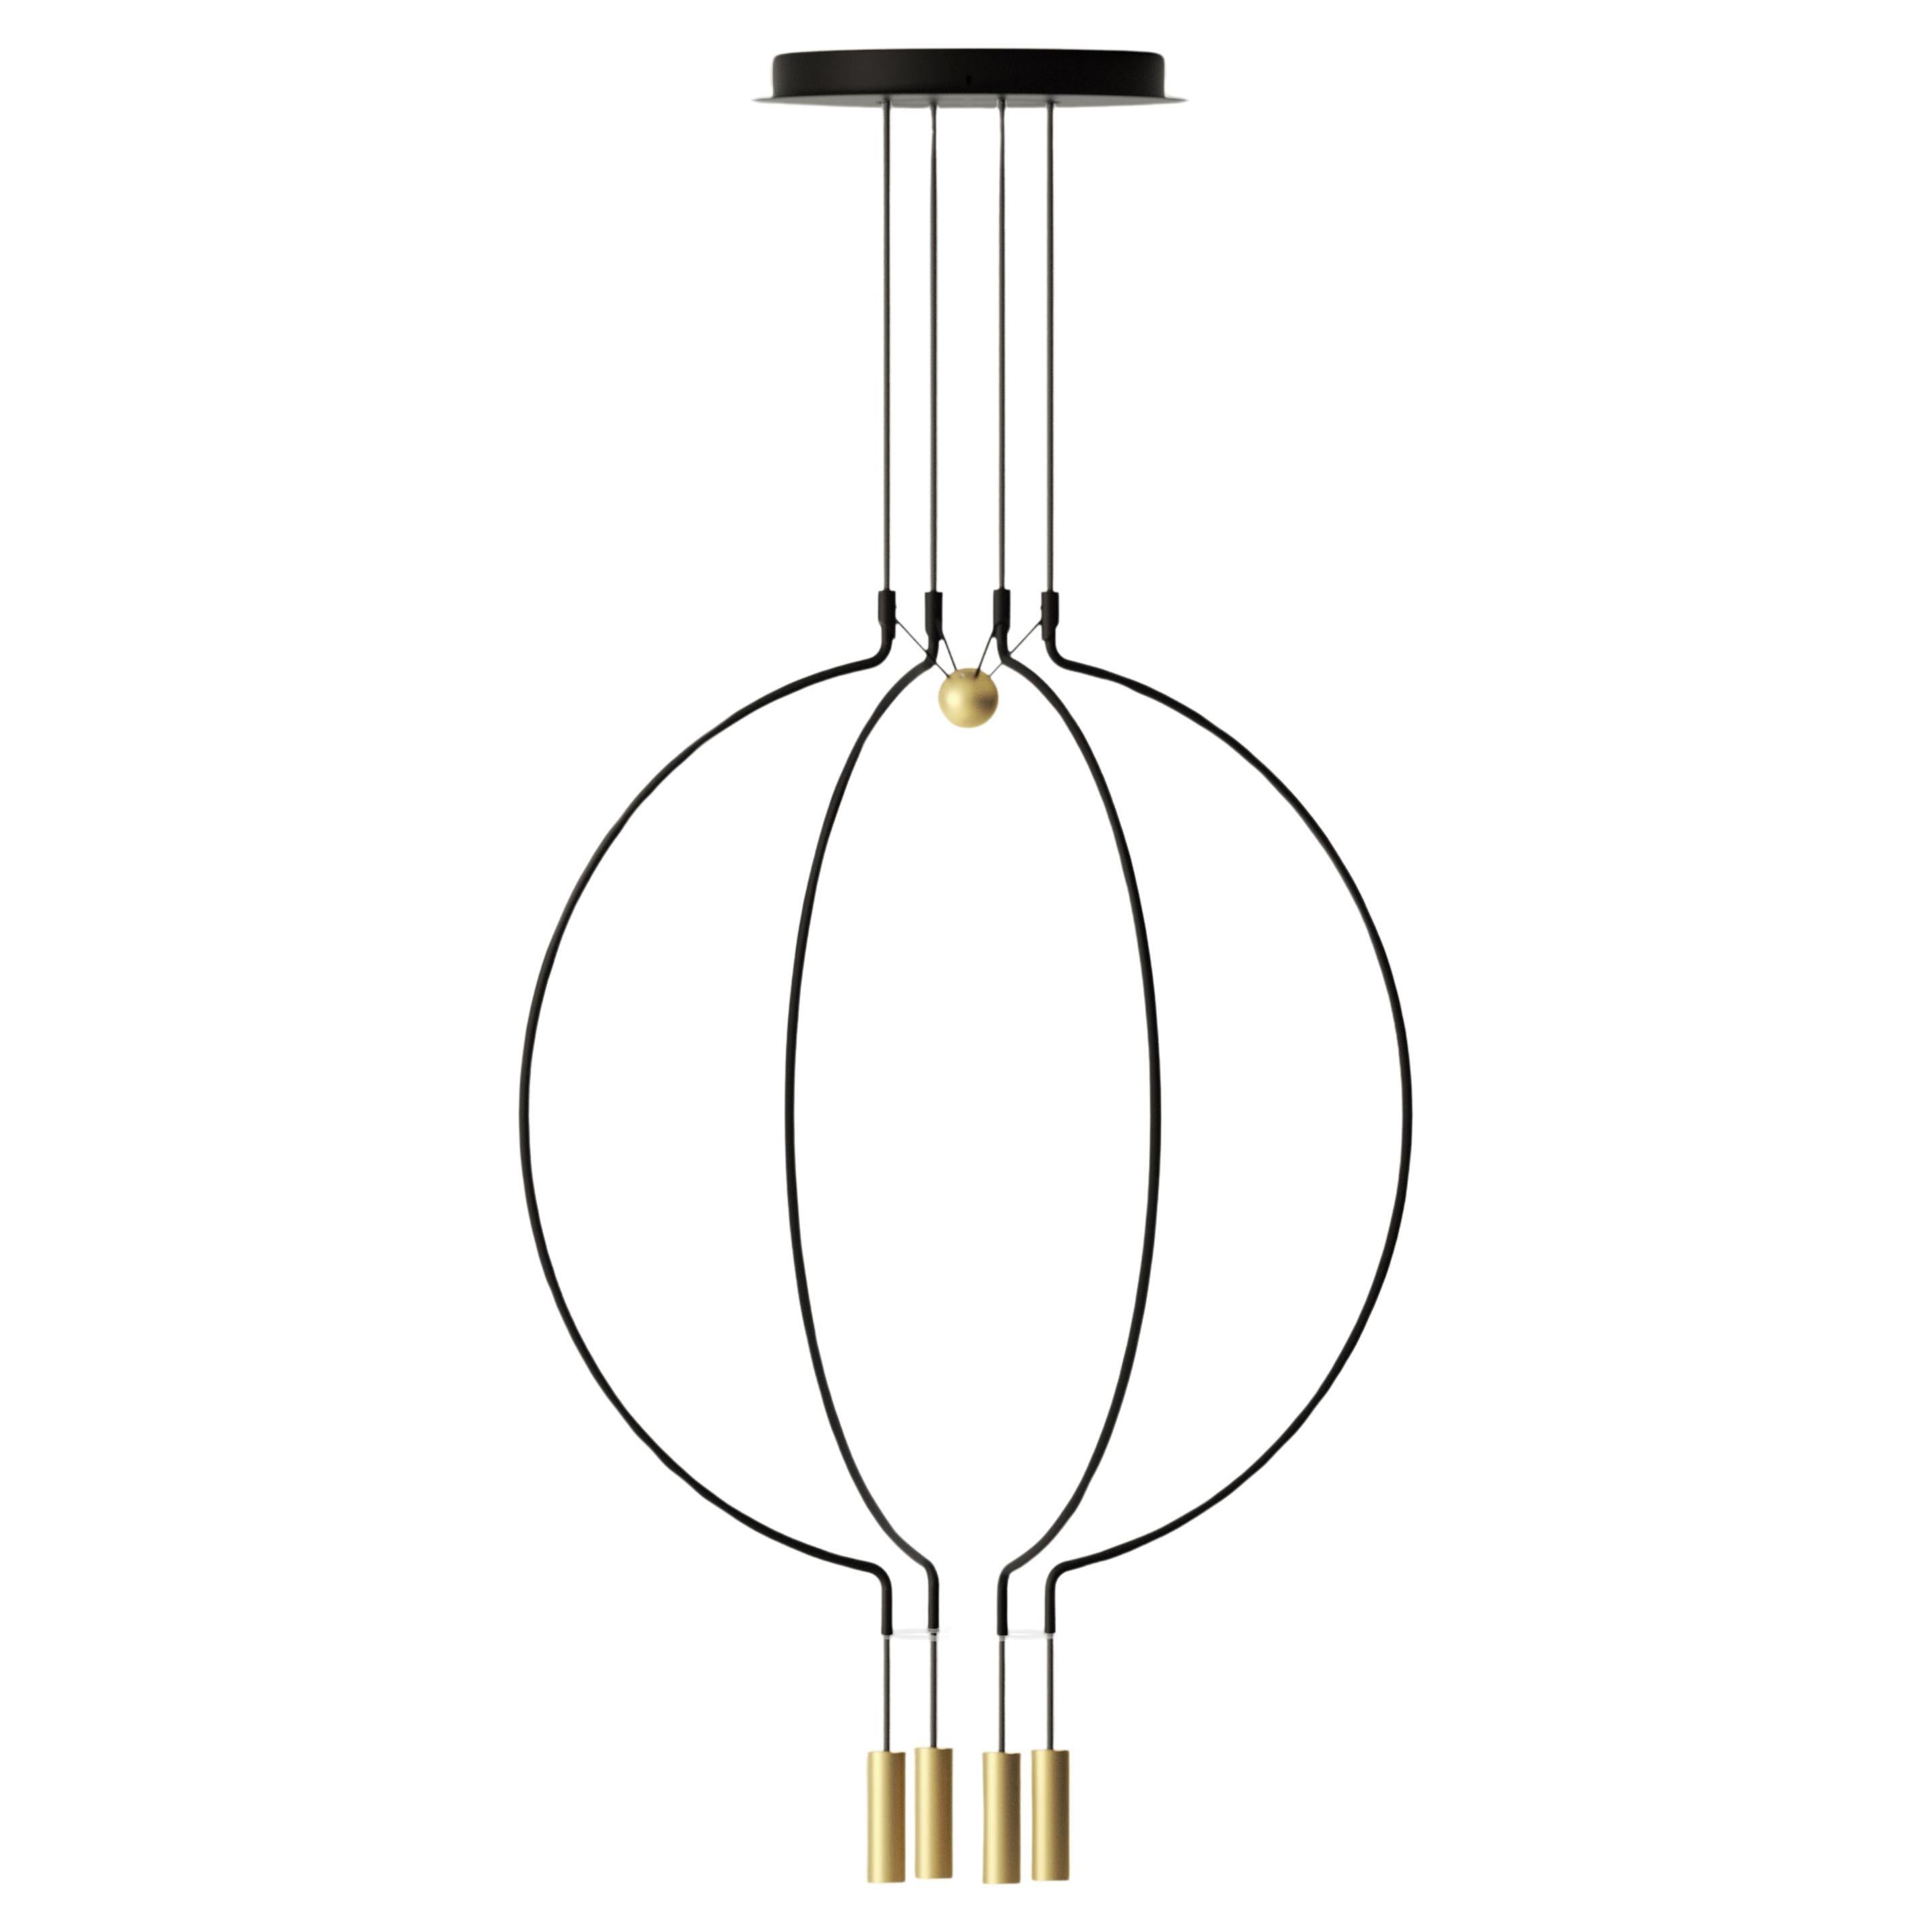 Axolight Liaison Model M4 Pendant Lamp in Black/Gold by Sara Moroni For Sale